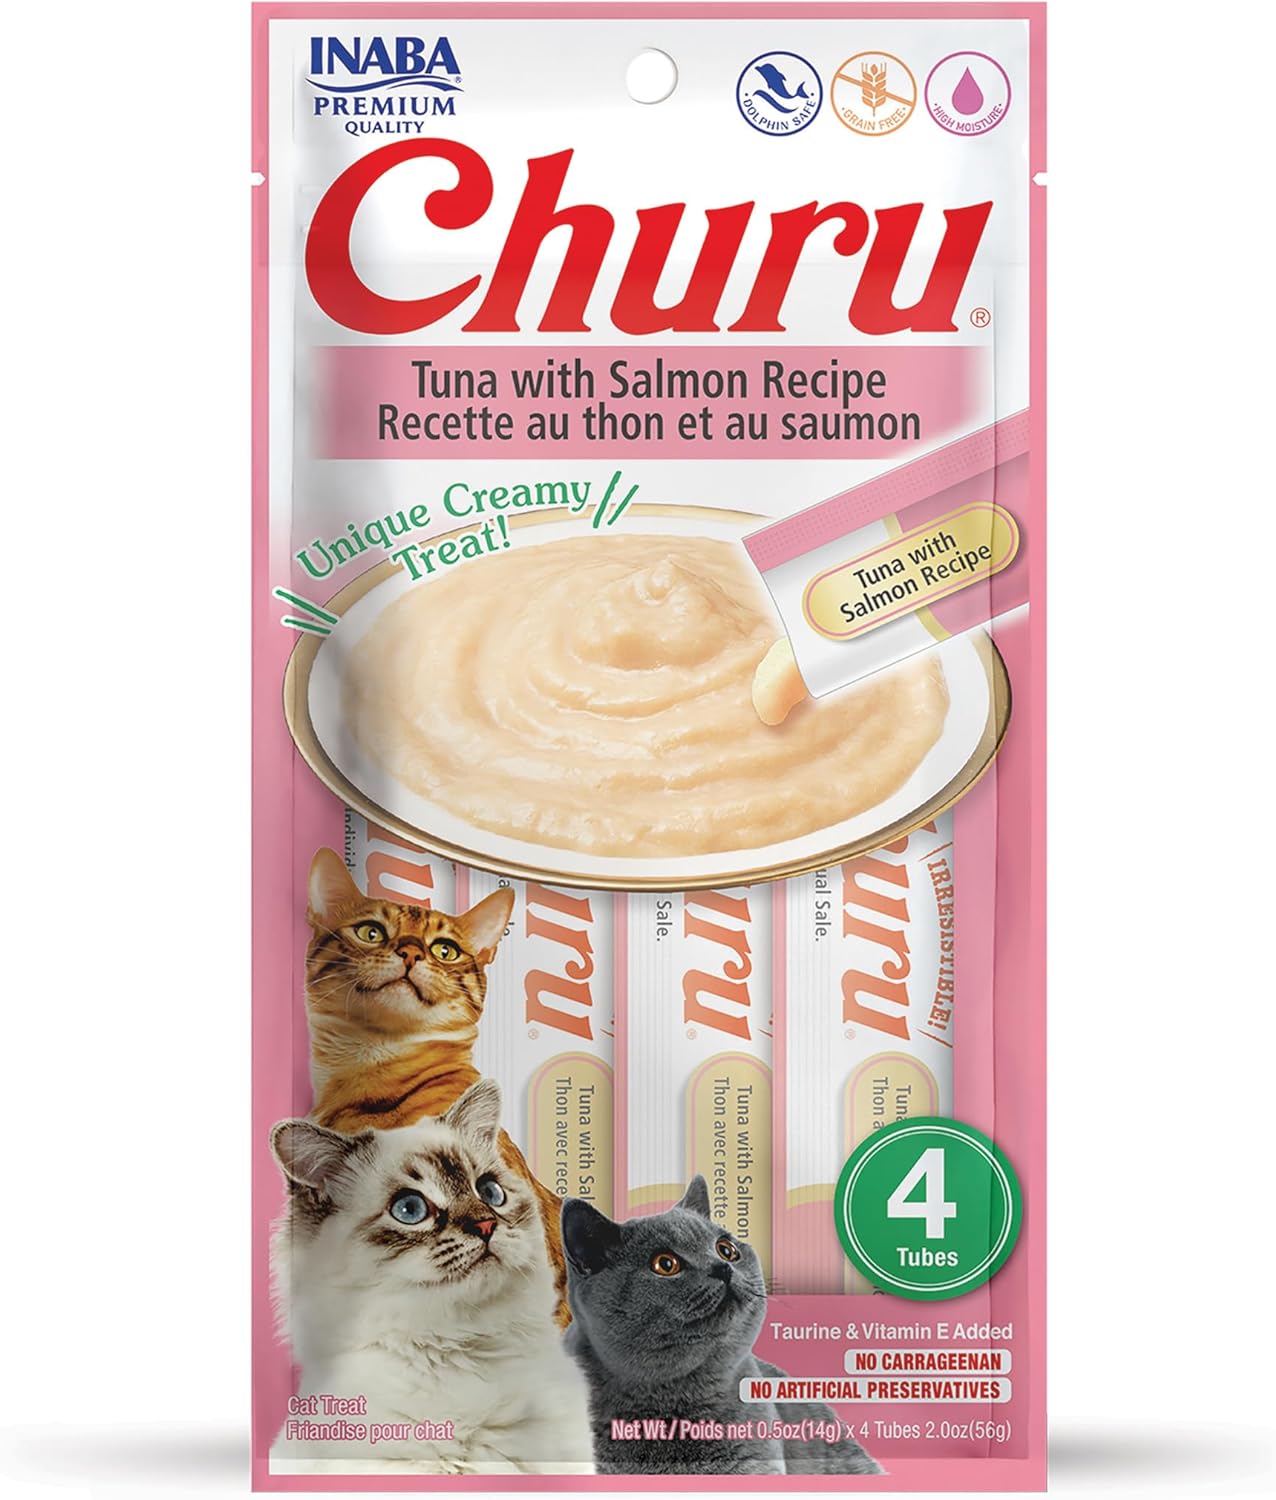 INABA Churu Cat Treats, Grain-Free, Lickable, Squeezable Creamy Purée Cat Treat/Topper with Vitamin E & Taurine 0.5 Ounces Each Tube, 4 Tubes, Tuna with Salmon Recipe